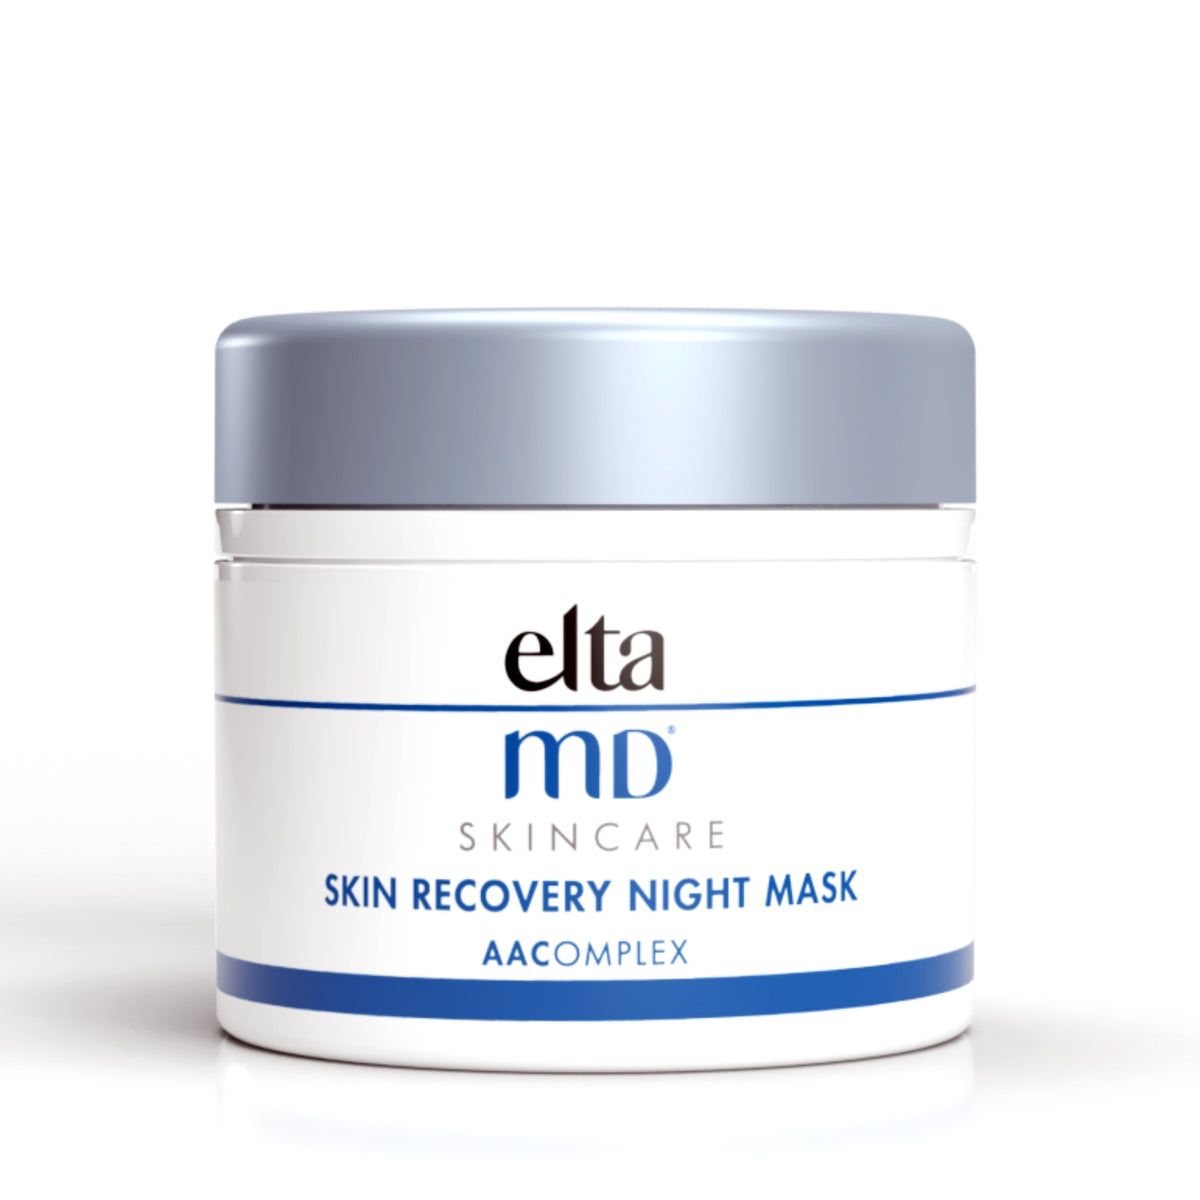 EltaMD Skin Recovery Night Mask